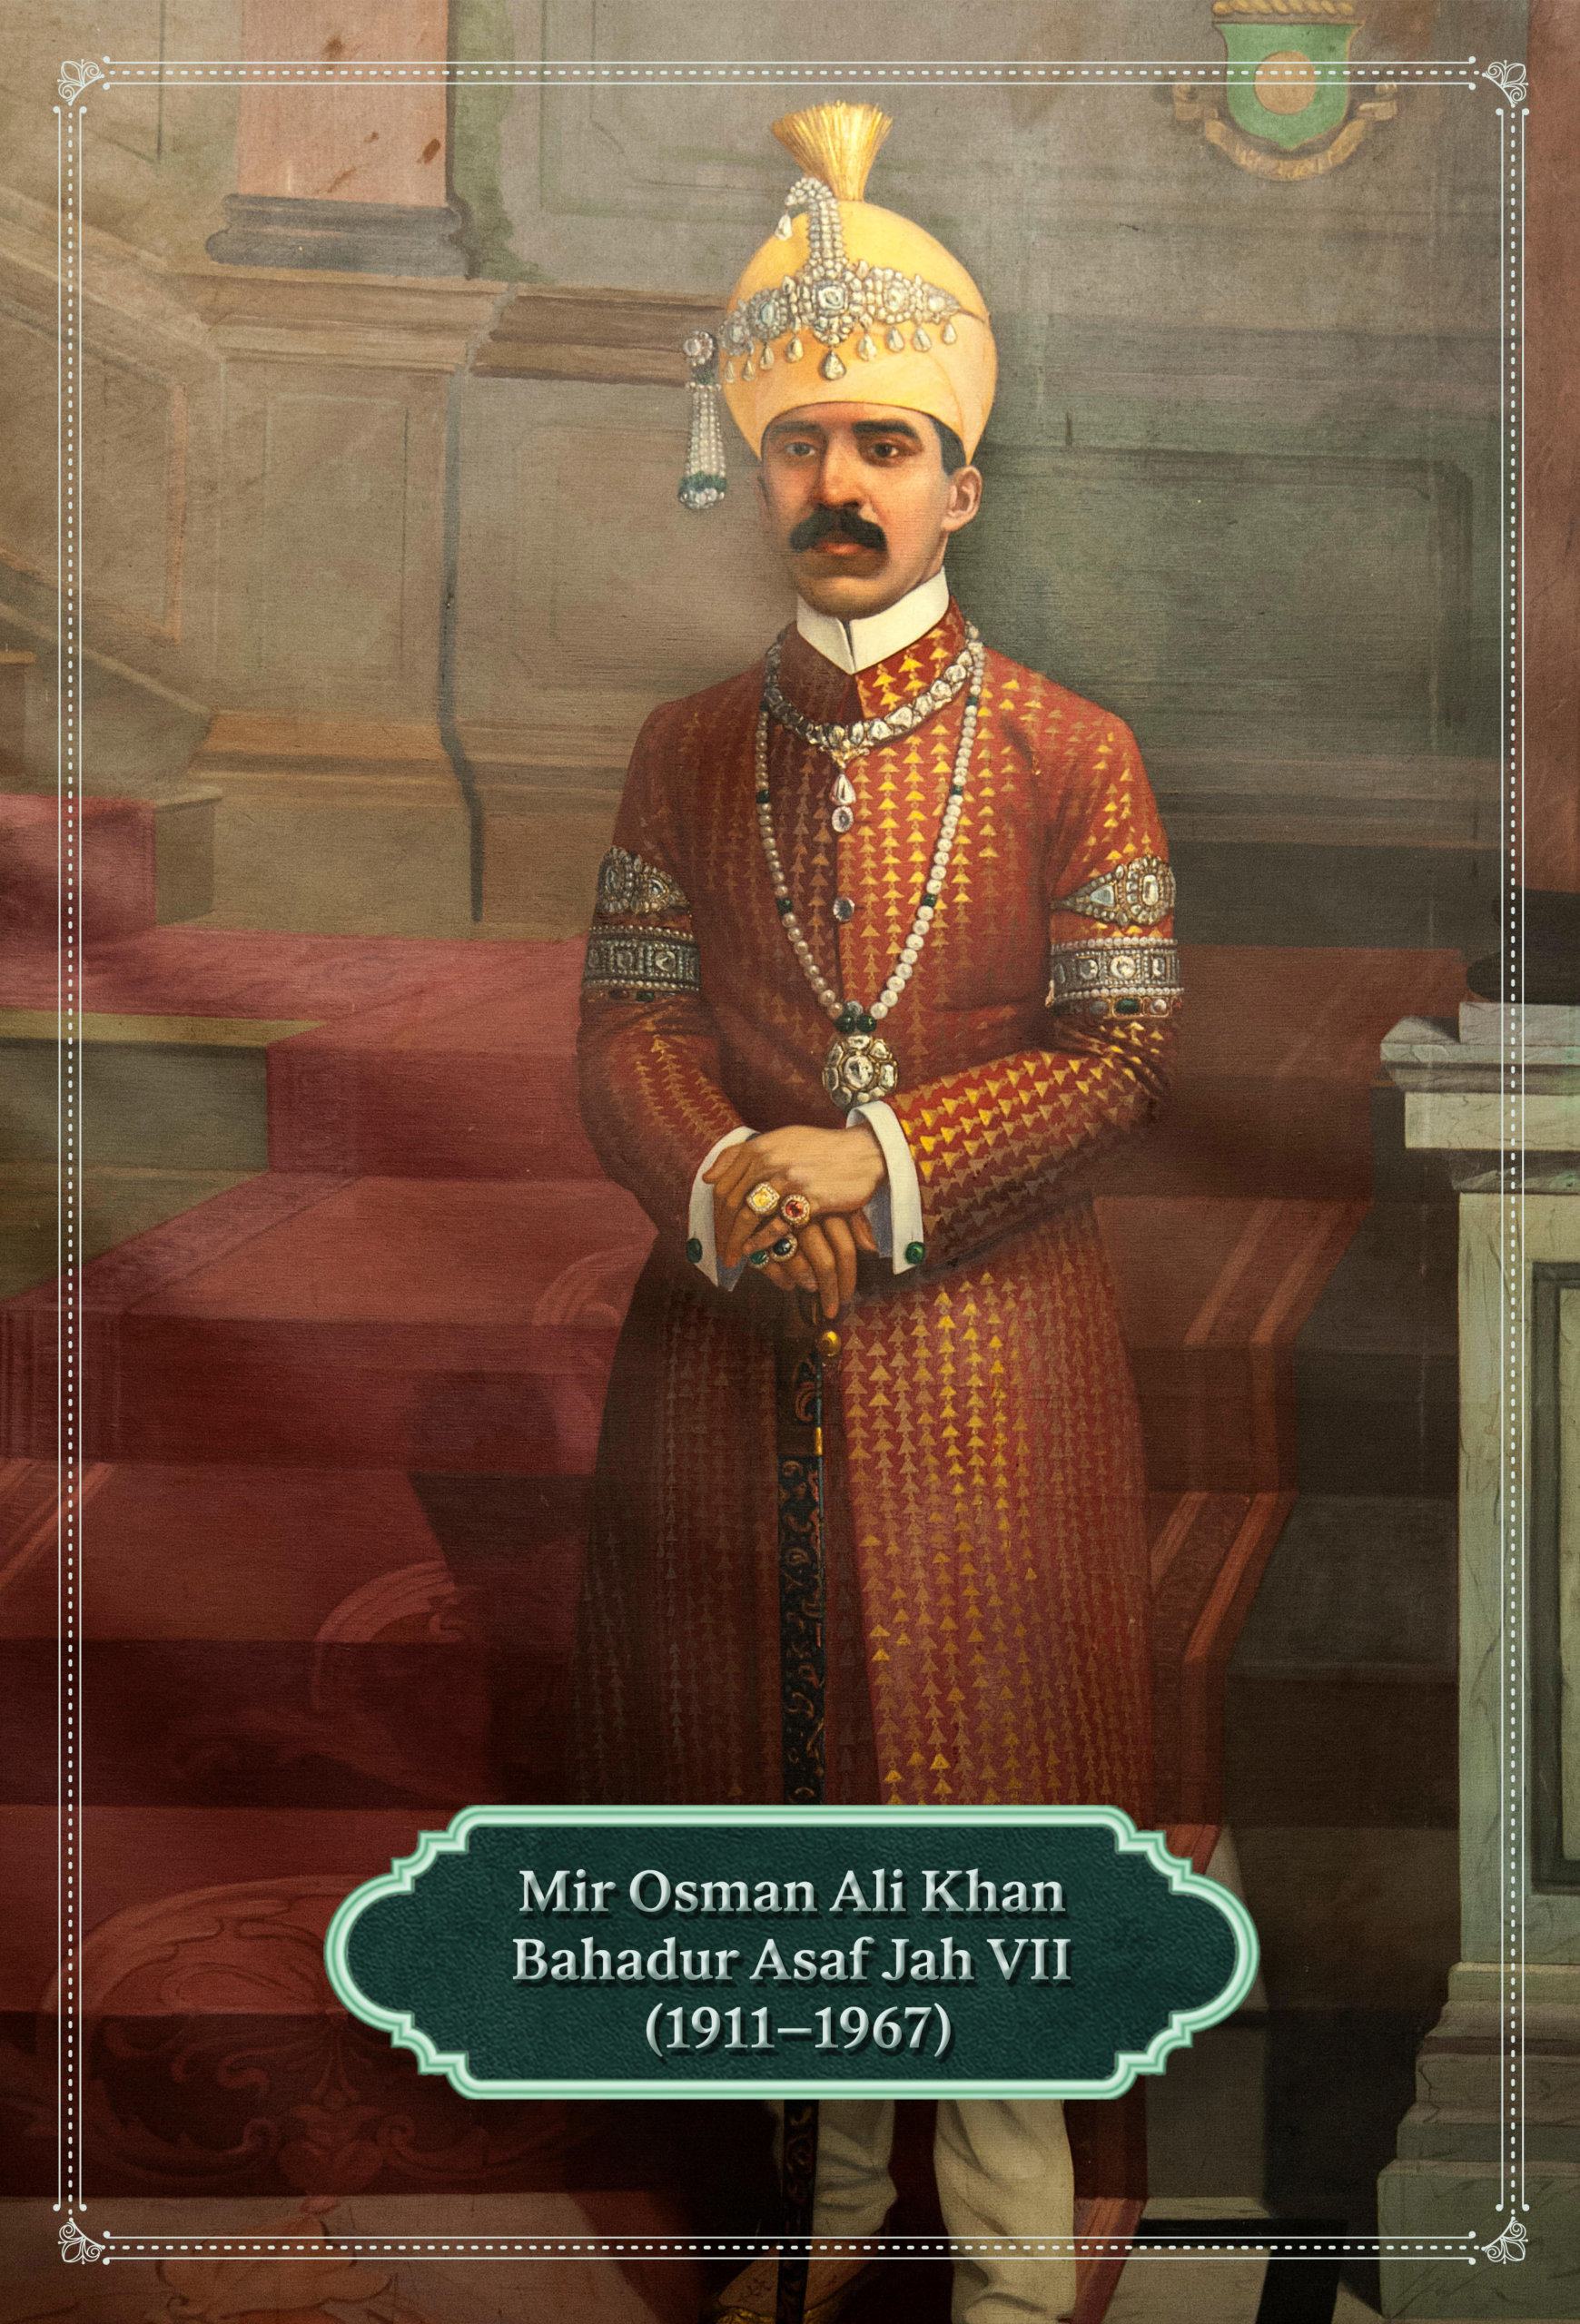 Mir Osman ali khan bahadur asif jah vii wearing diamond jewellery